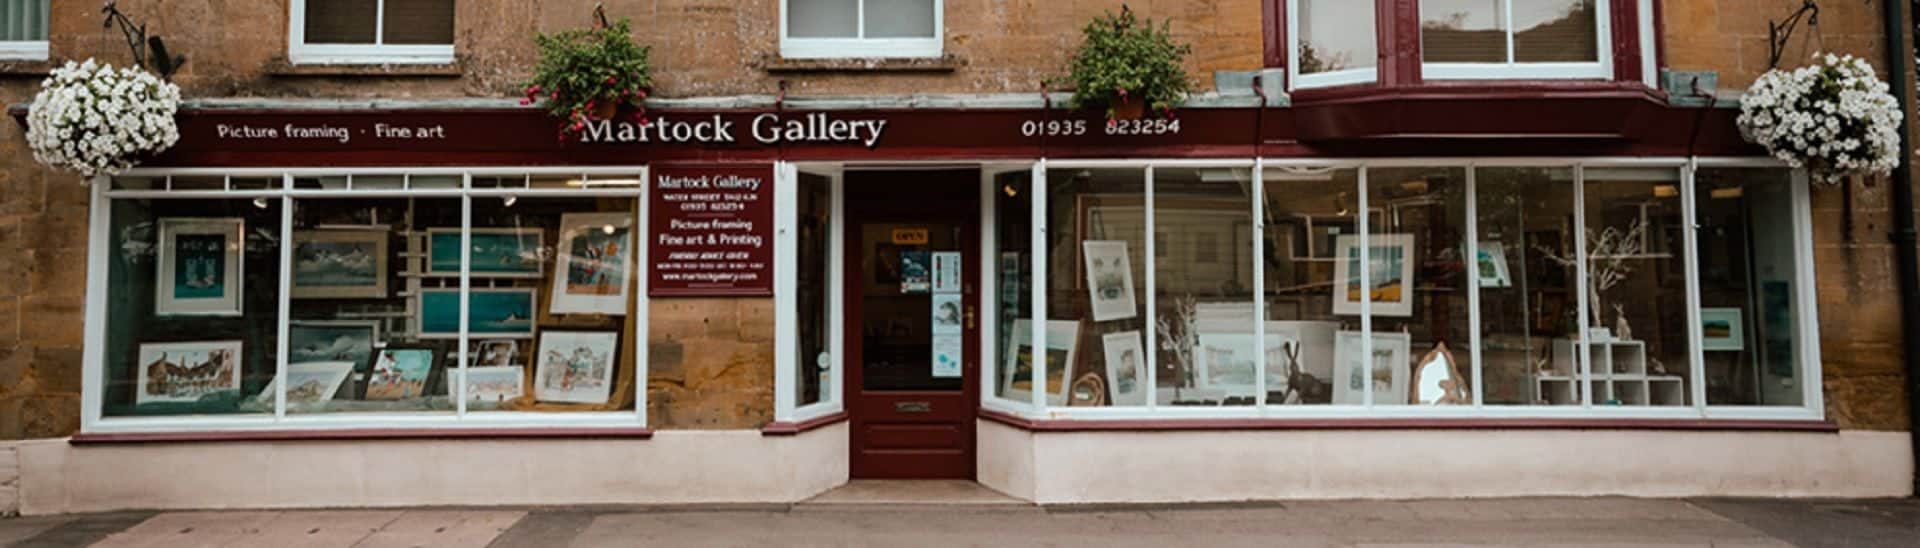 Martock Gallery in UK